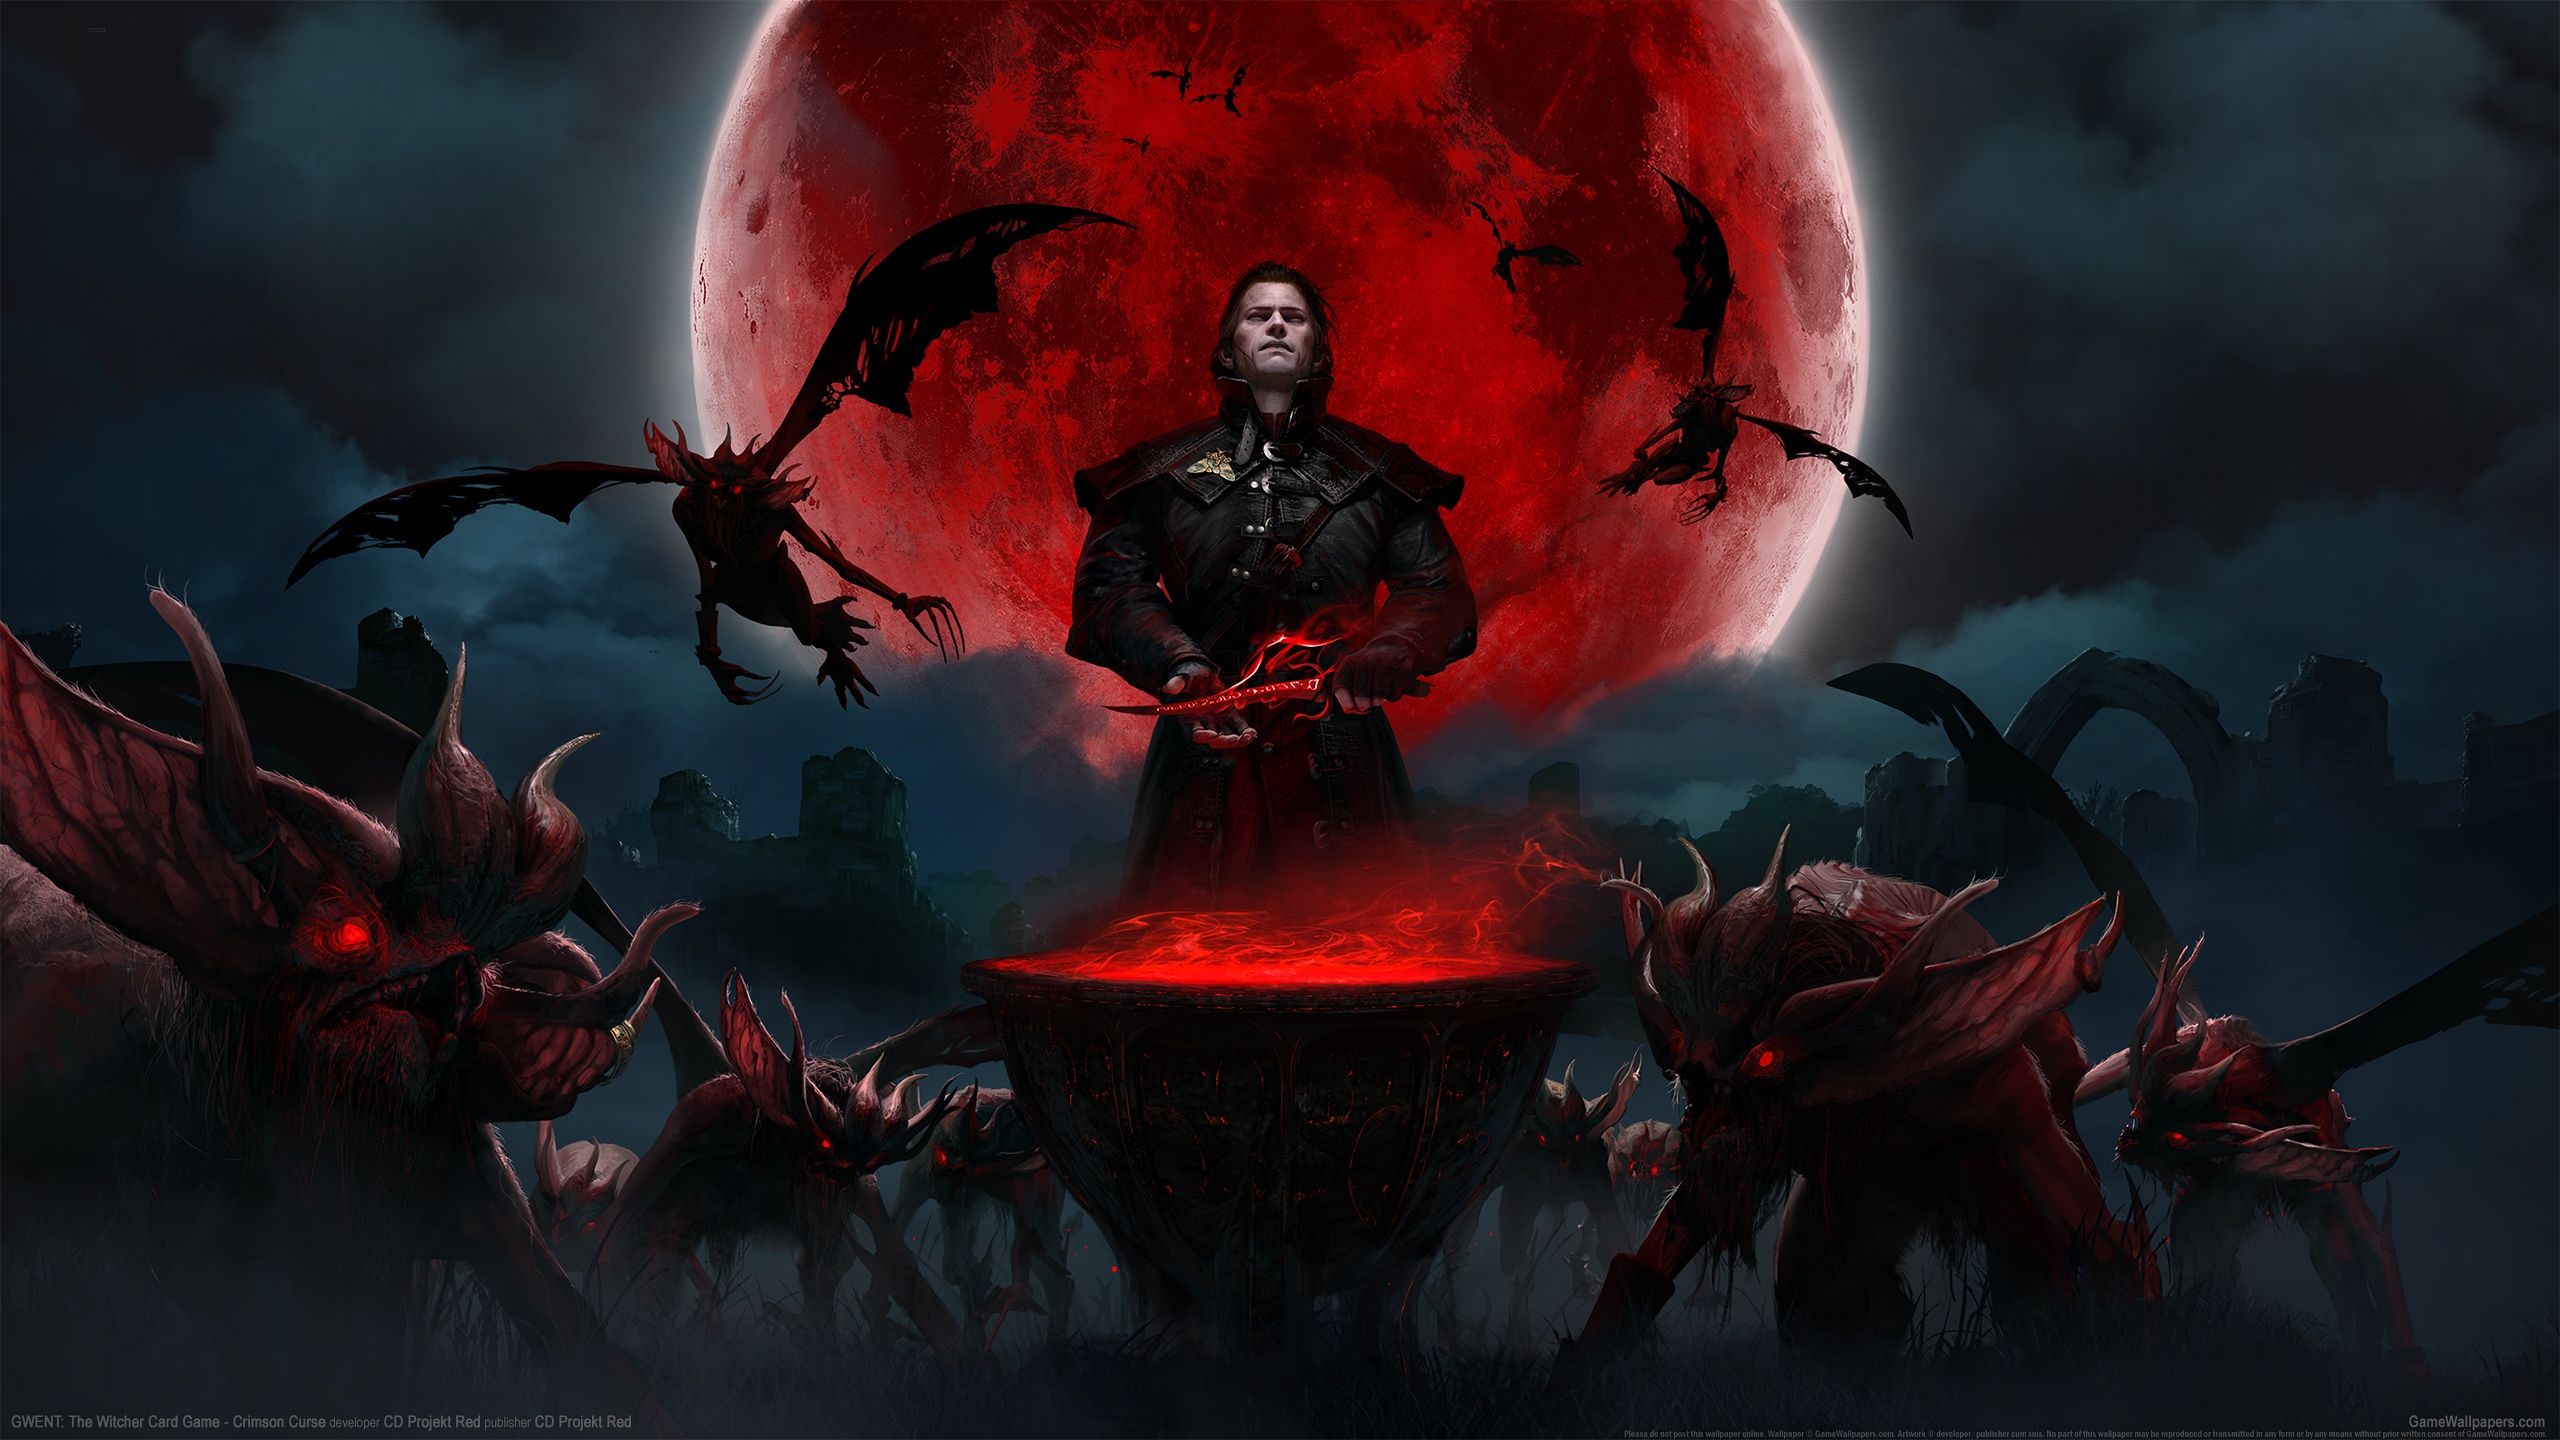 GWENT: The Witcher Card Game - Crimson Curse 2560x1440 achtergrond 01